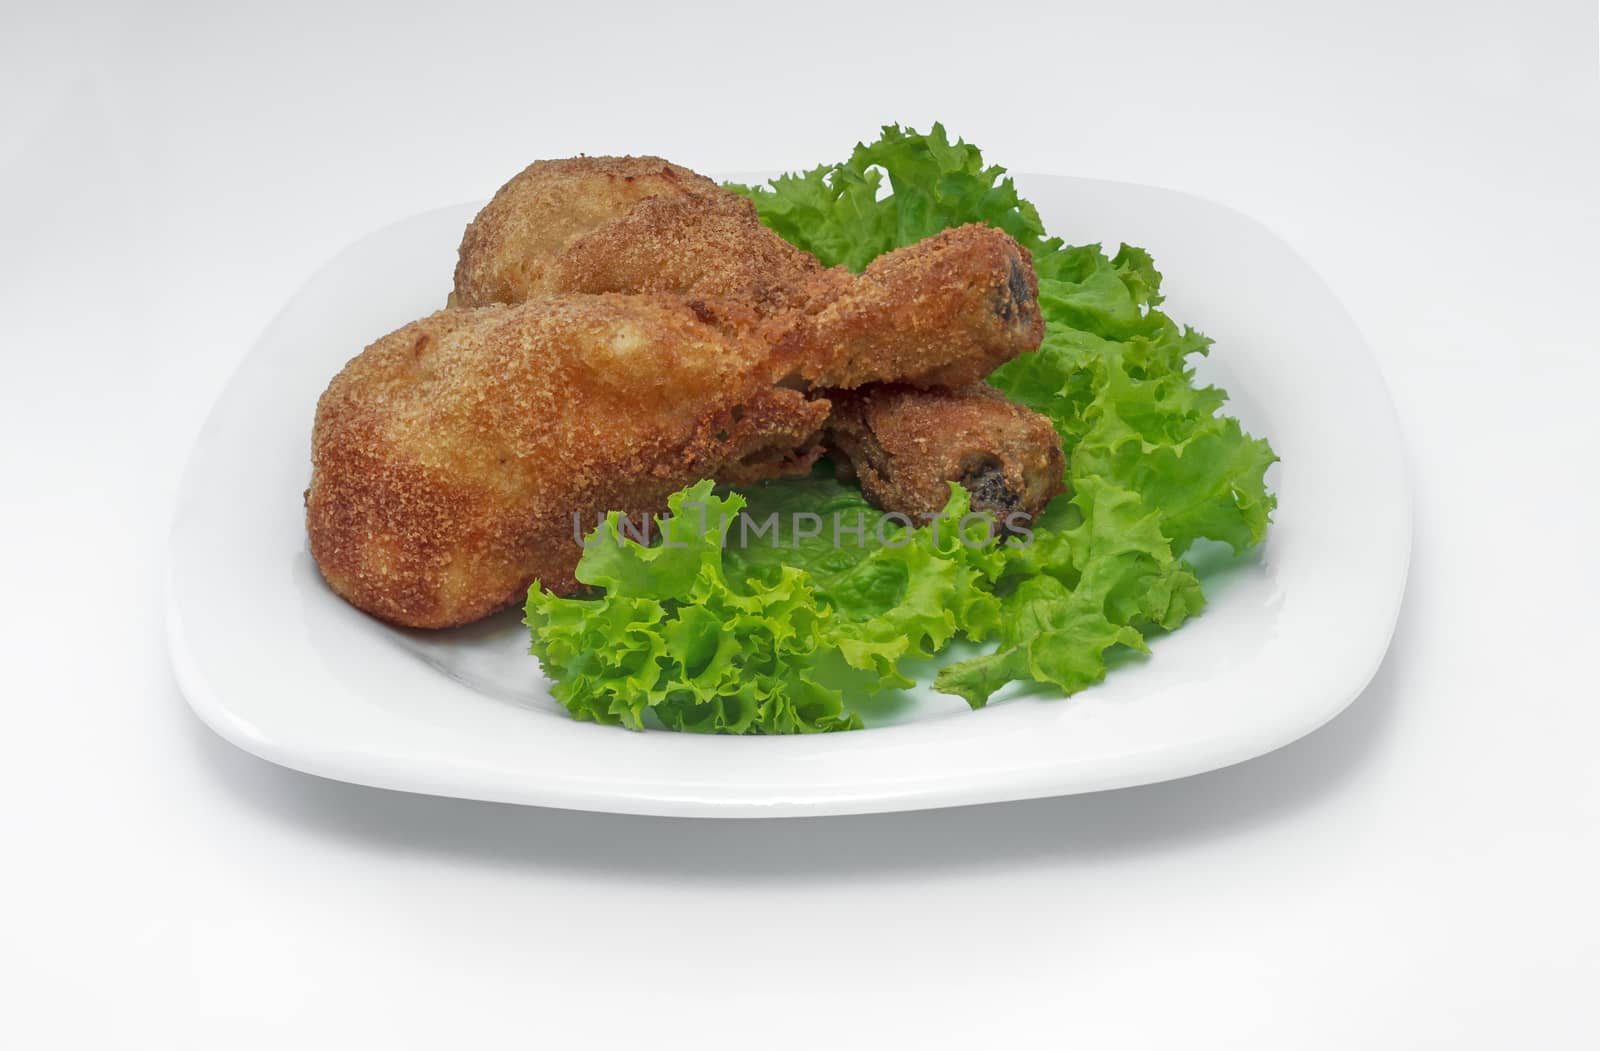 Fried chicken. by fogen